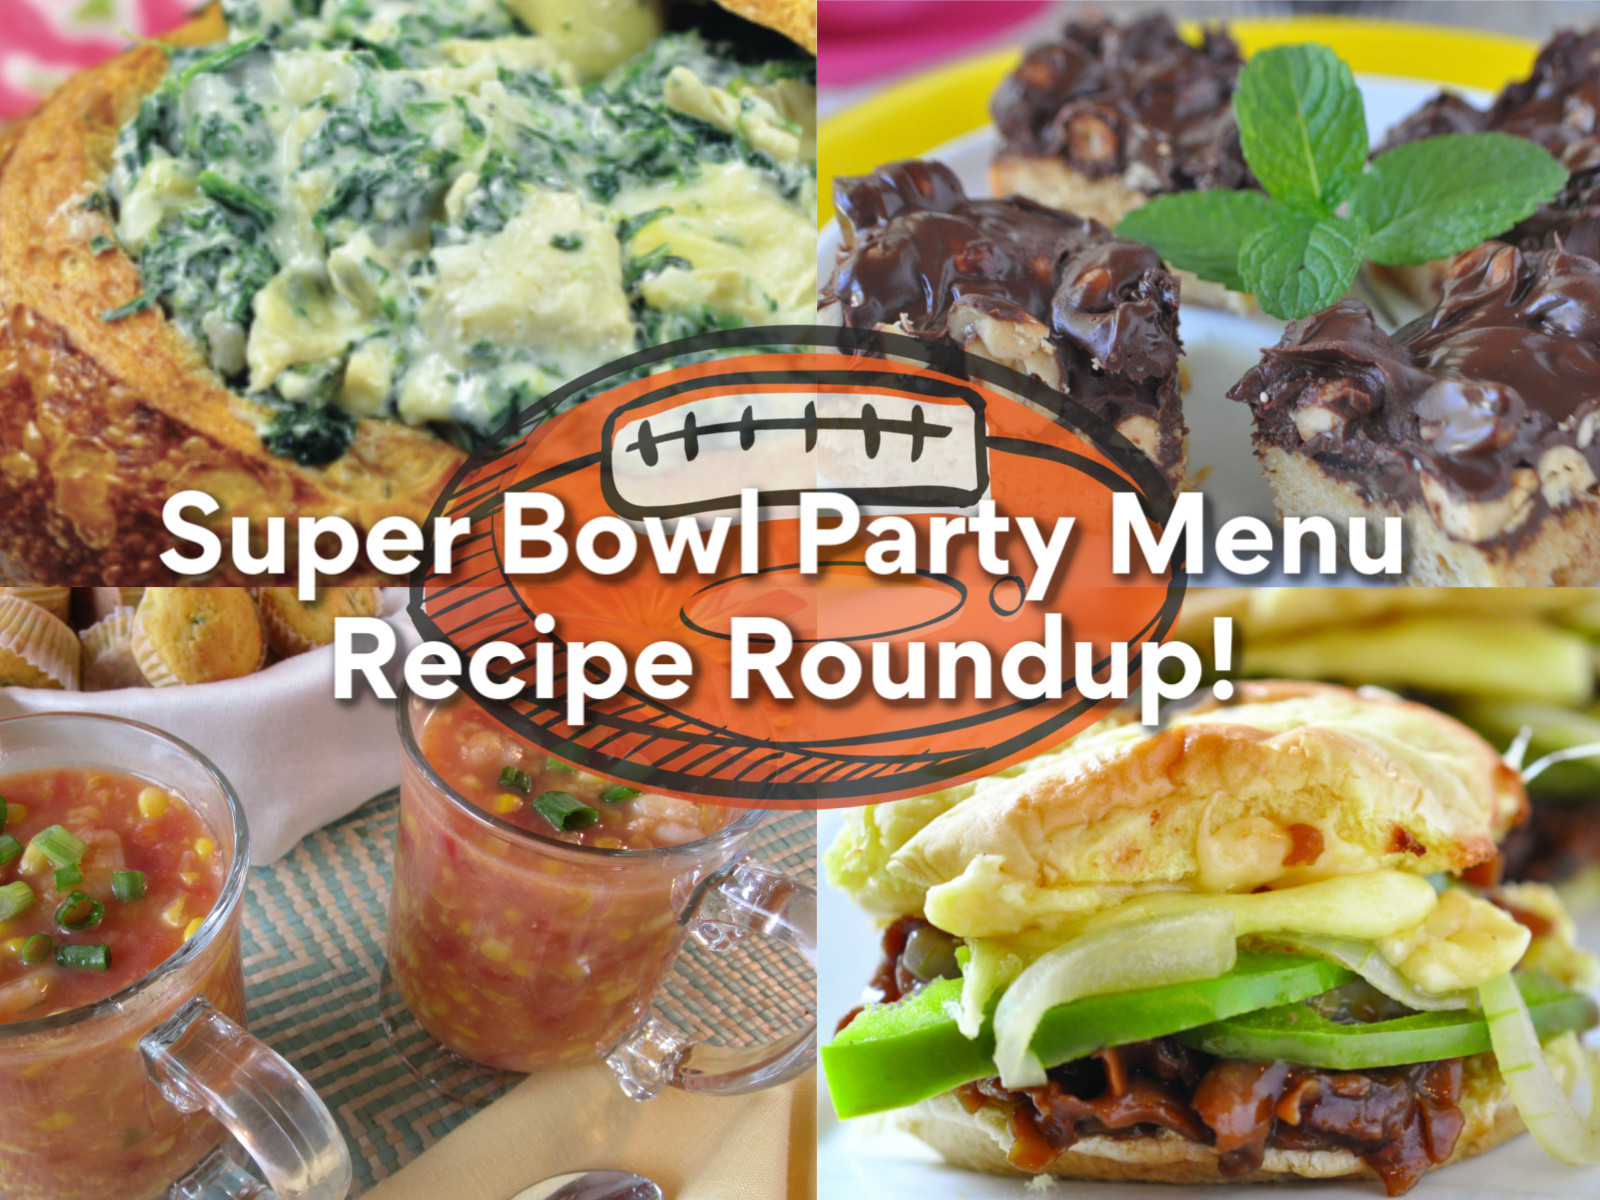 Super Bowl Menus And Recipes
 Super Bowl Party Menu Recipe Roundup